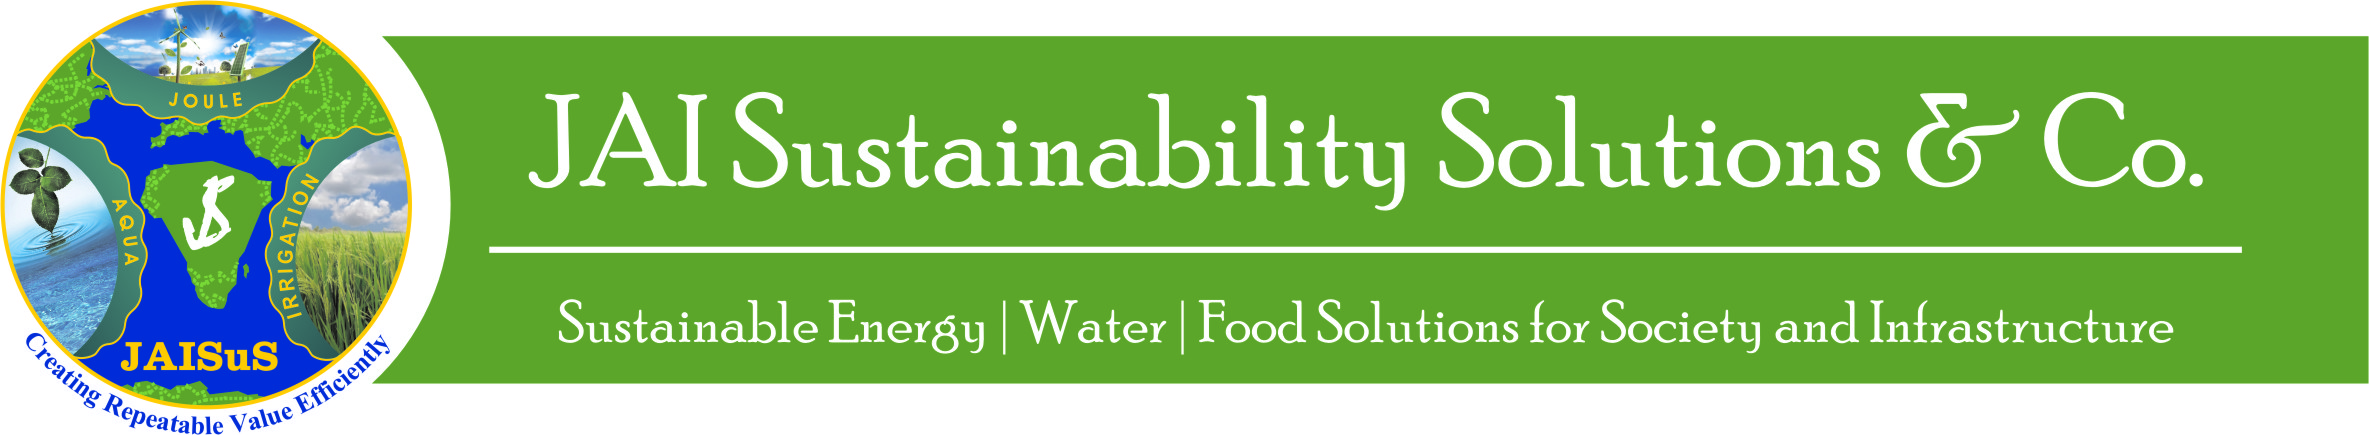 Jai Sustainability Solutions & Co